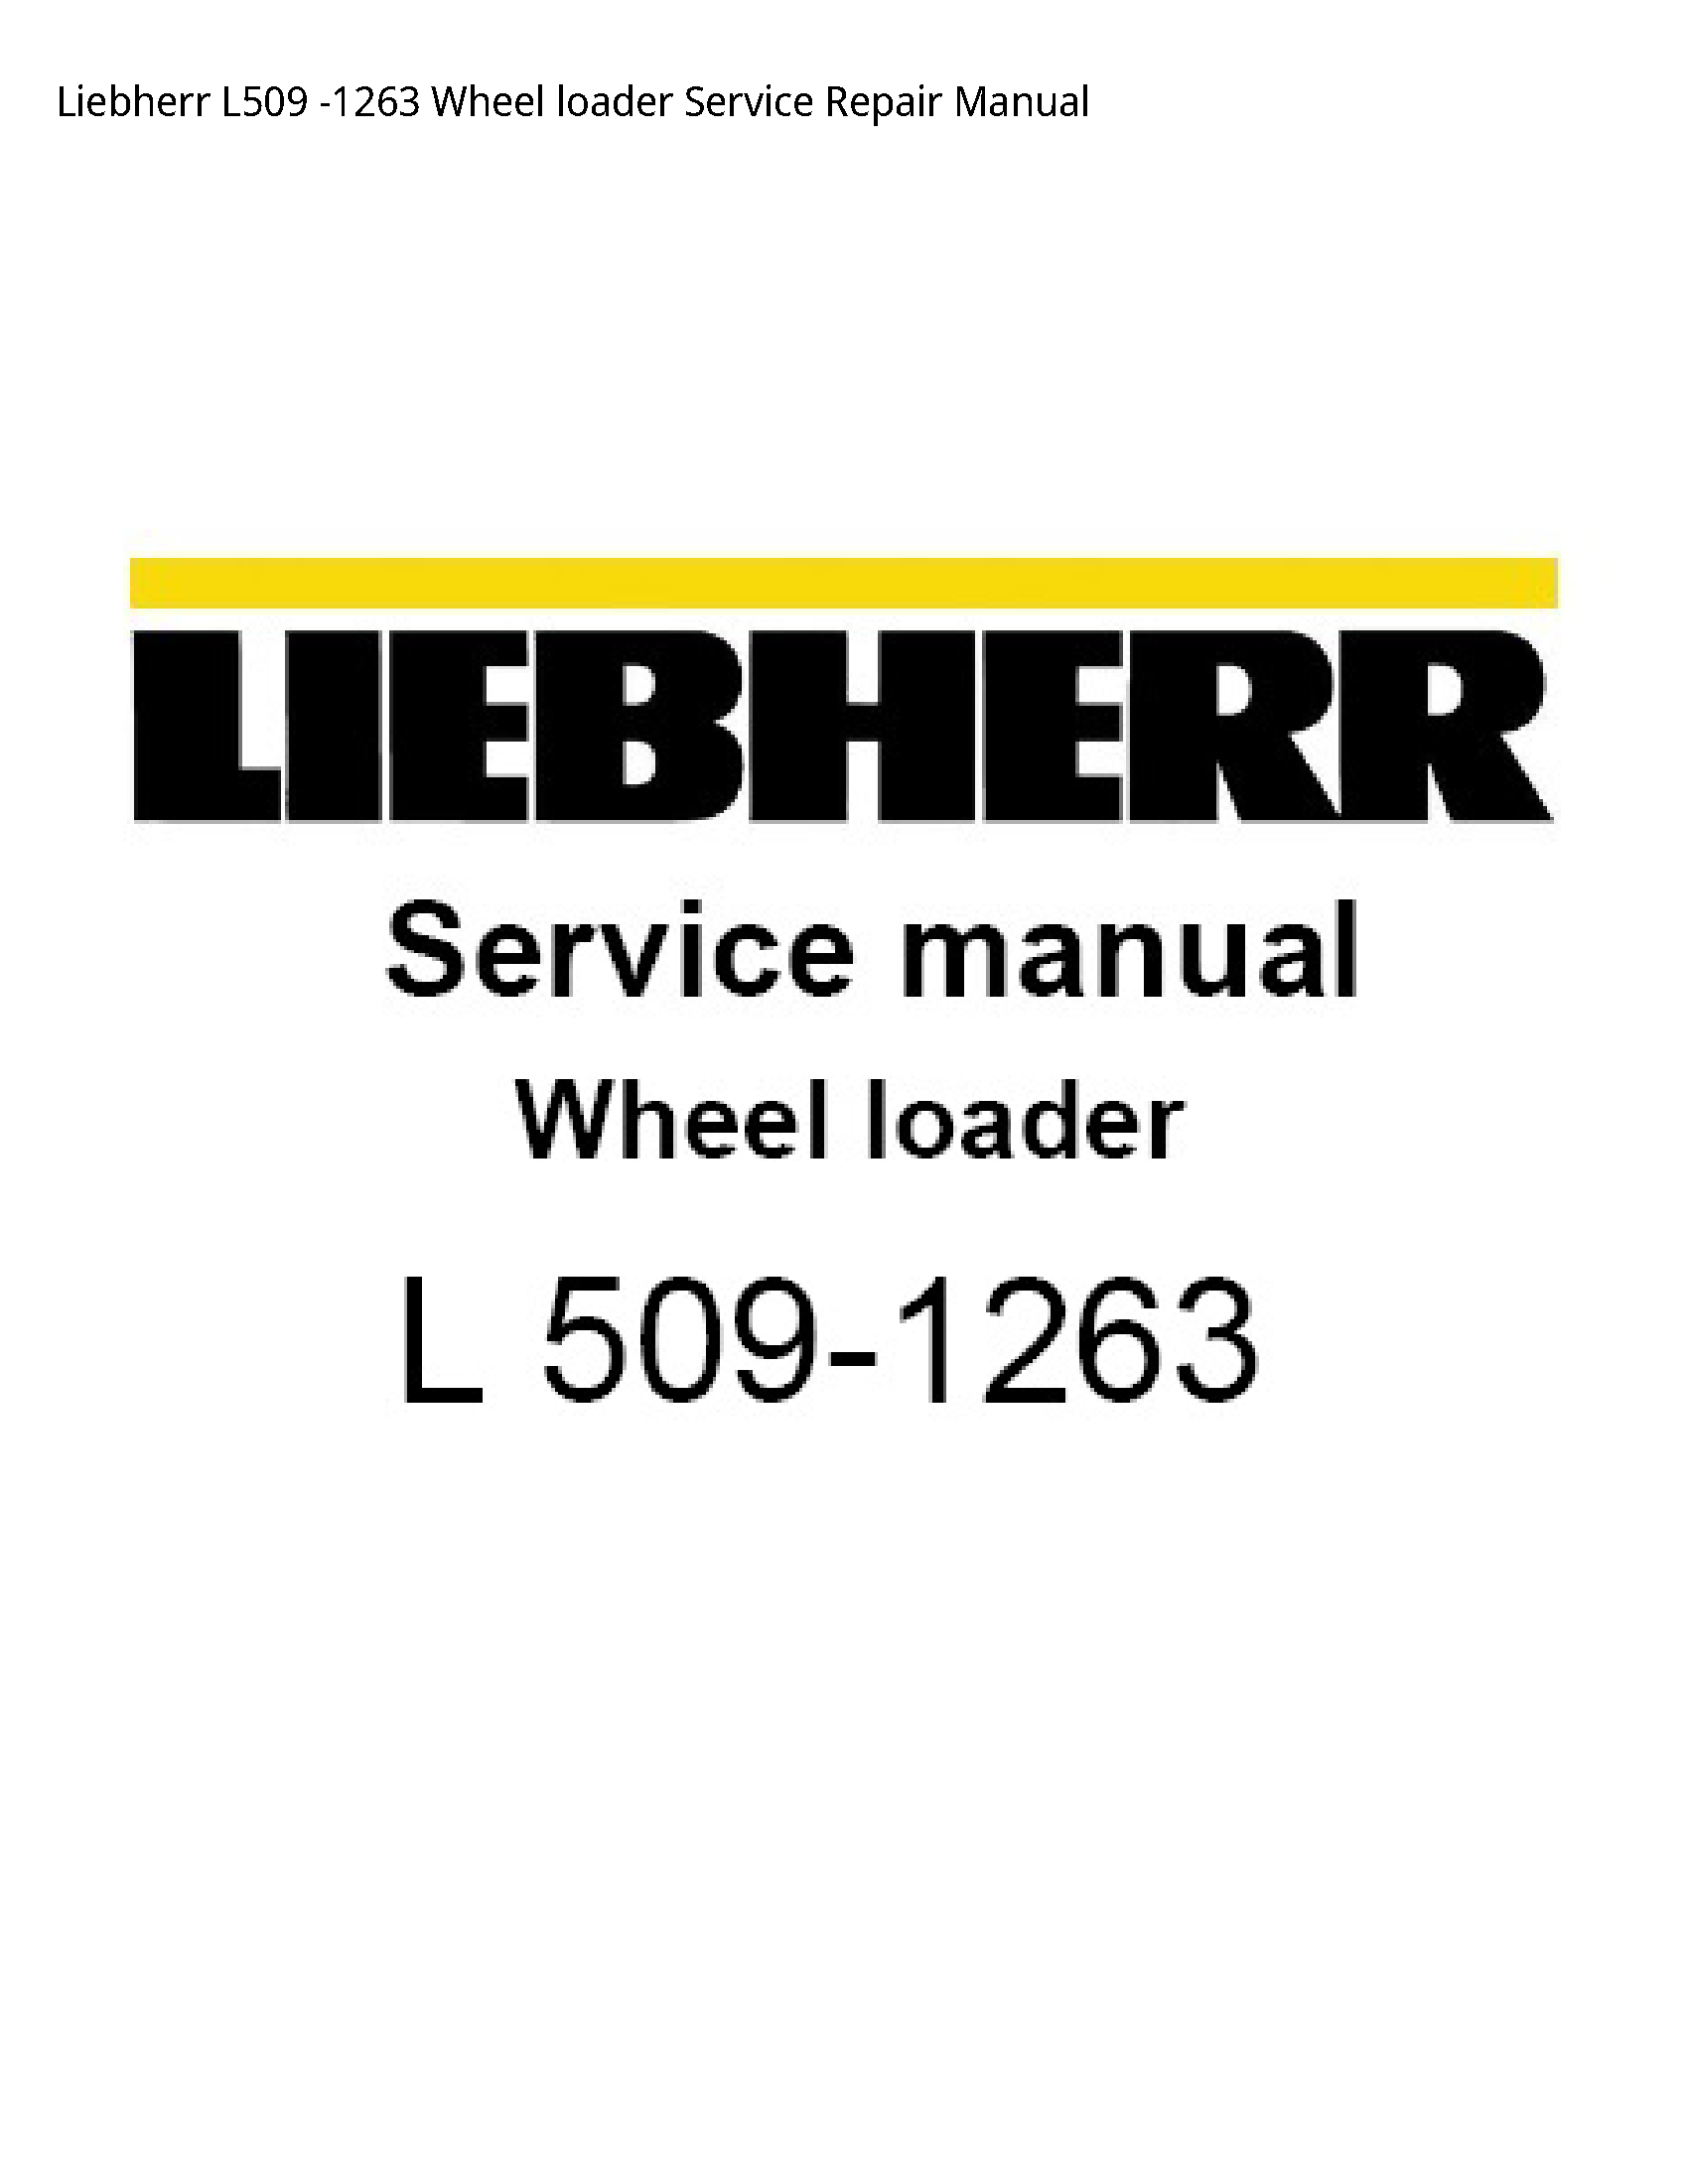 Liebherr L509 Wheel loader manual